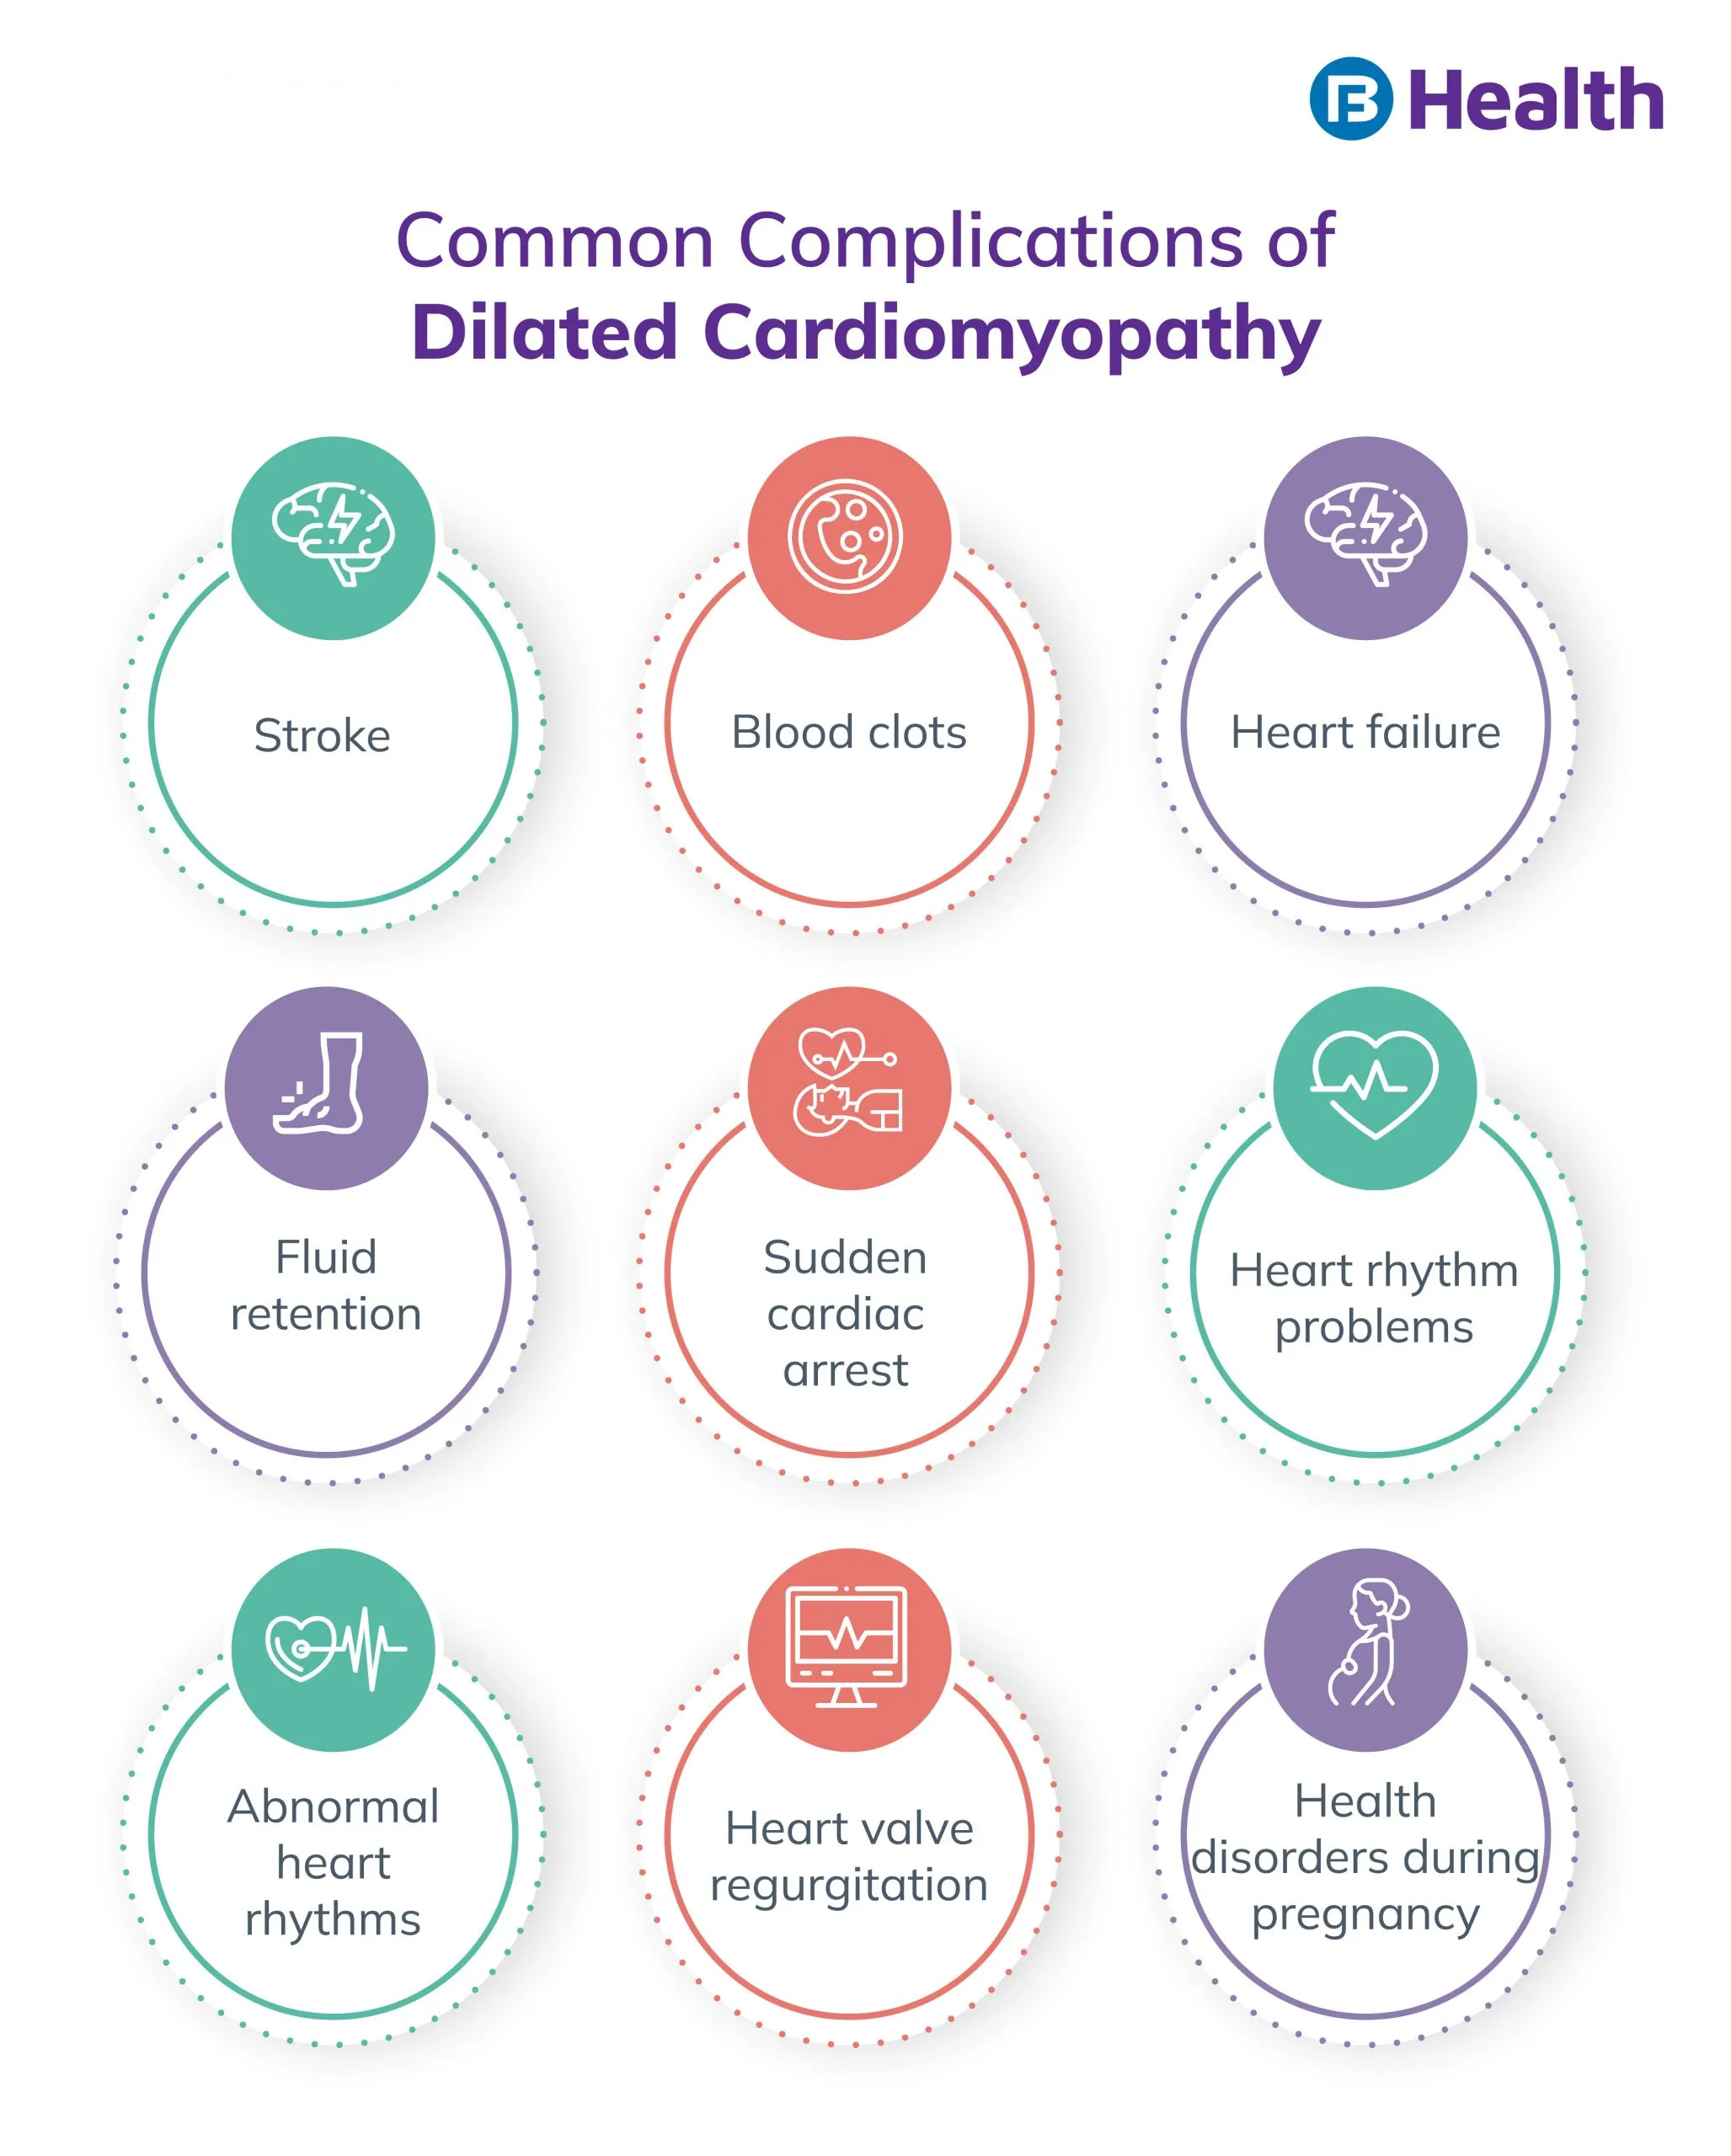 Dilated Cardiomyopathy complications